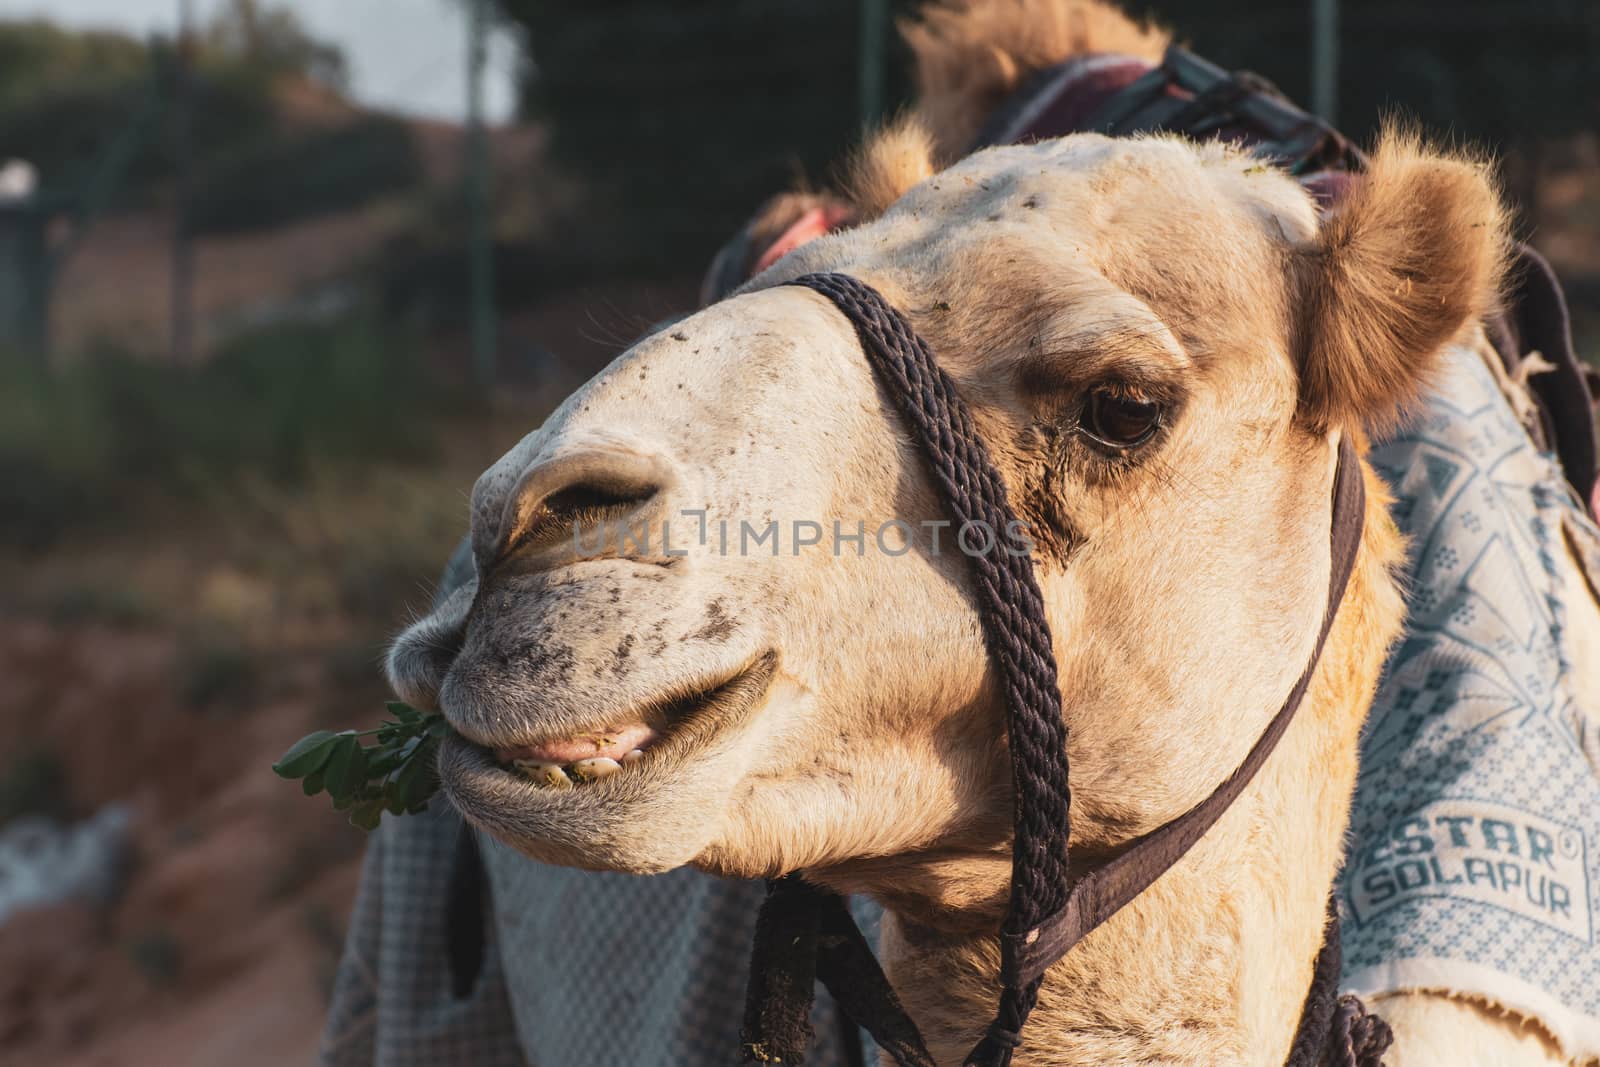 Close-up of a desert dromedary camel facial expression eating sh by kingmaphotos